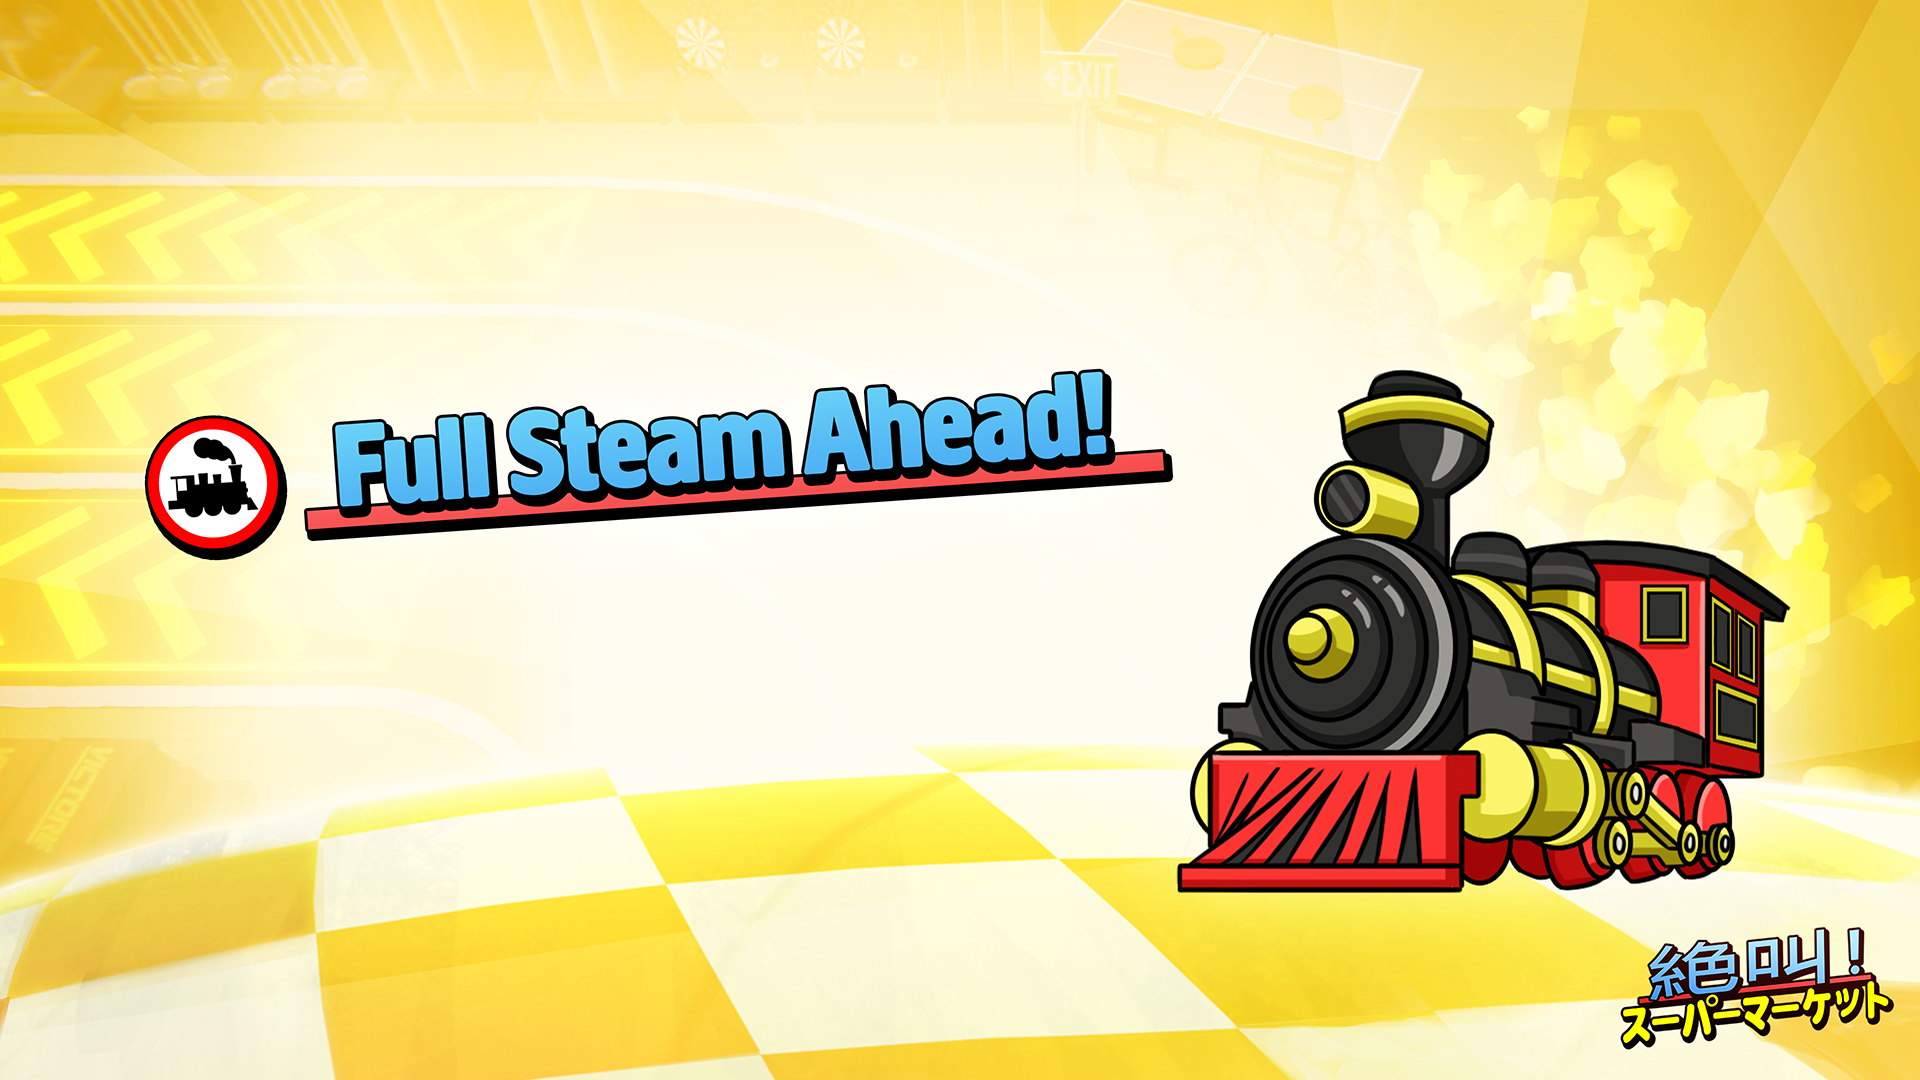 Full steam ahead!